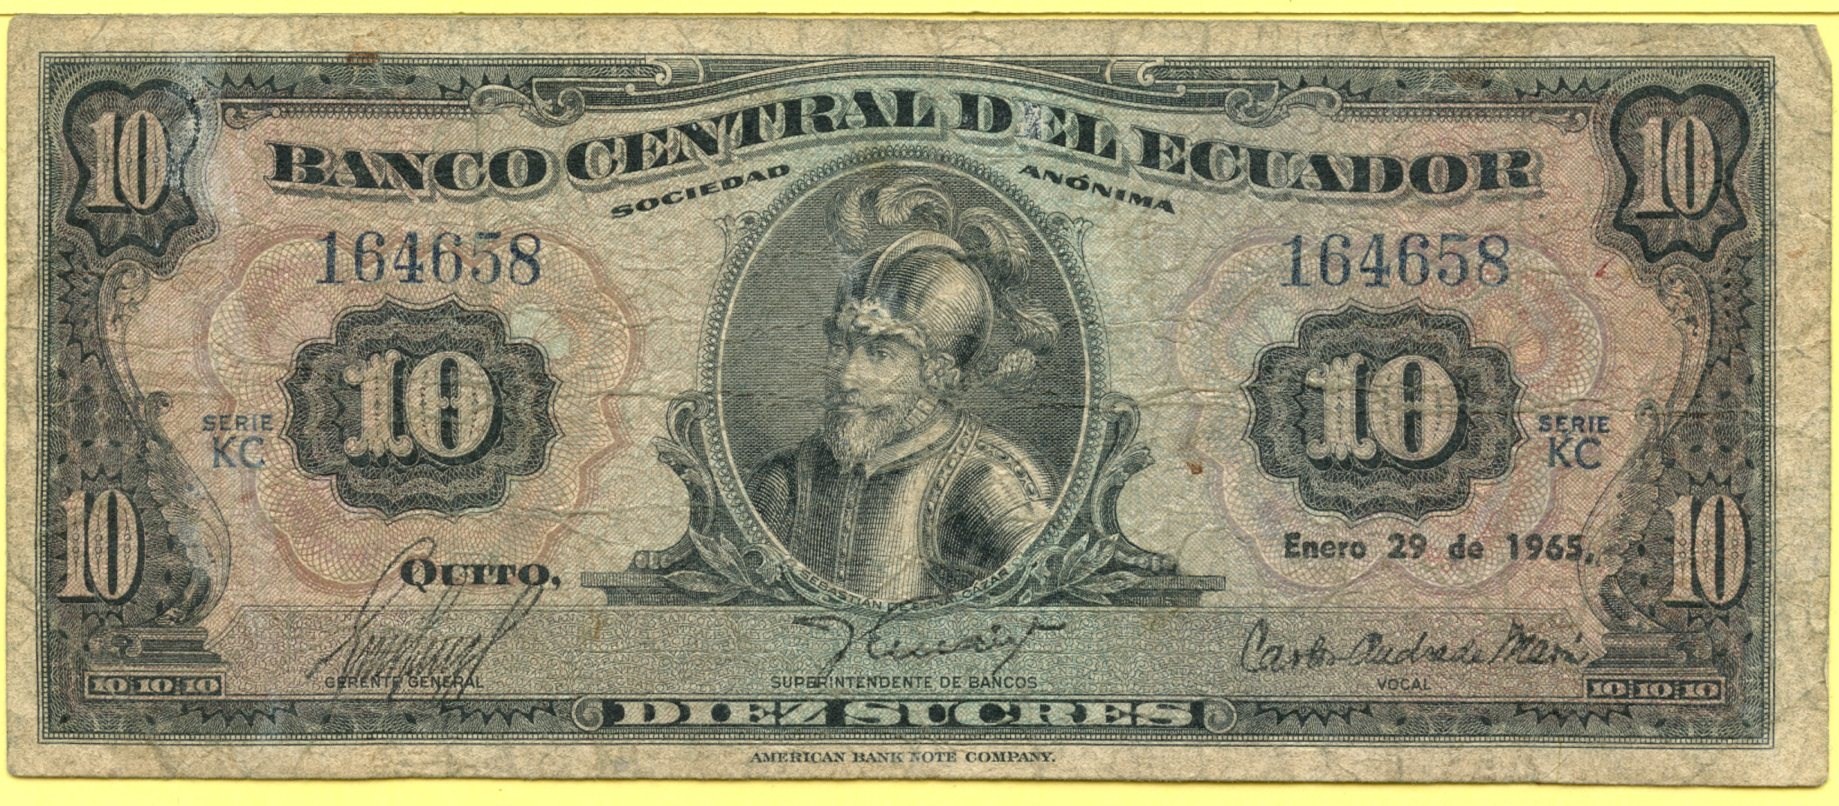 T me bank notes. Старые банкноты Эквадора. Эквадор банкнота 5000 сукре 1999. Эквадор банкнота 100 сукре 1994. Банкнота 10 сукре 1988.